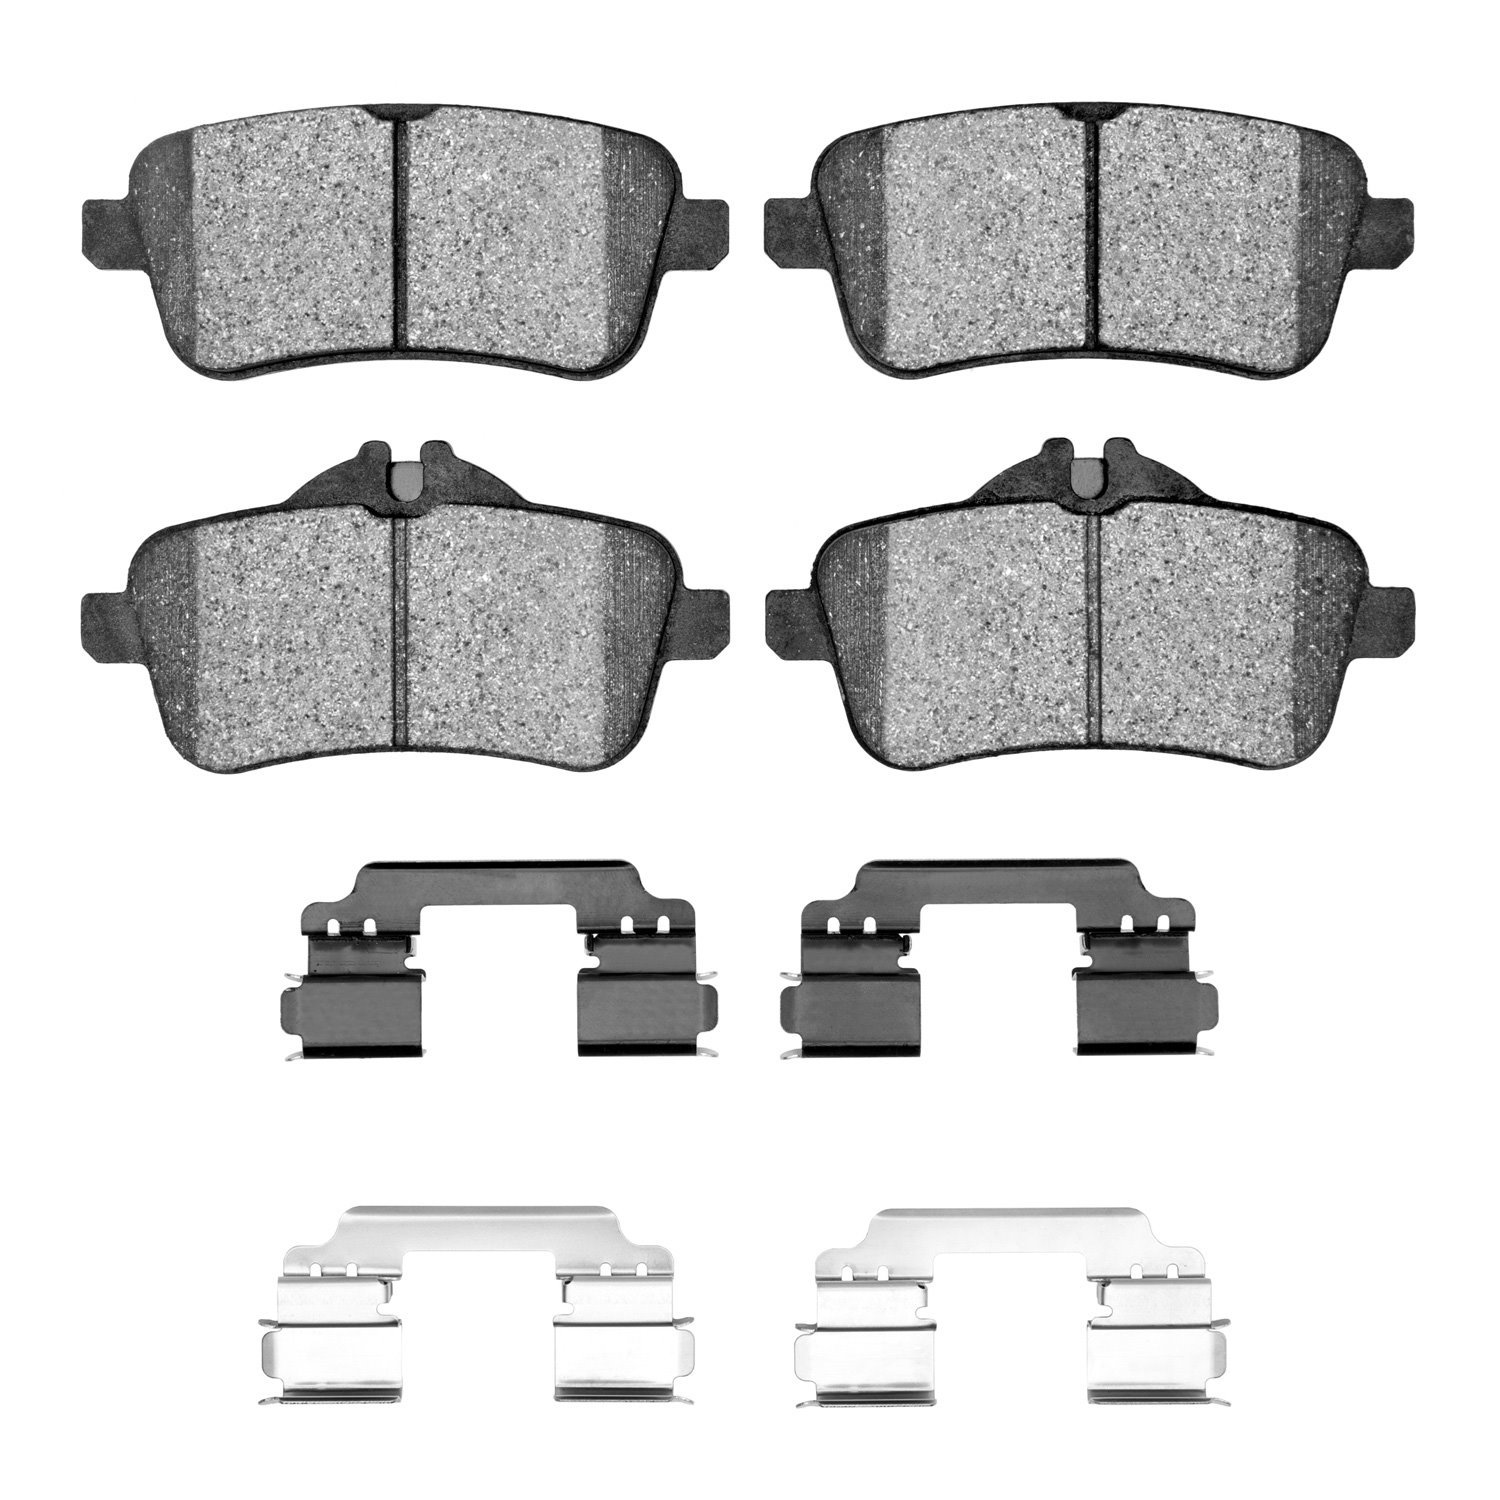 1551-1630-23 5000 Advanced Low-Metallic Brake Pads & Hardware Kit, 2012-2019 Mercedes-Benz, Position: Rear